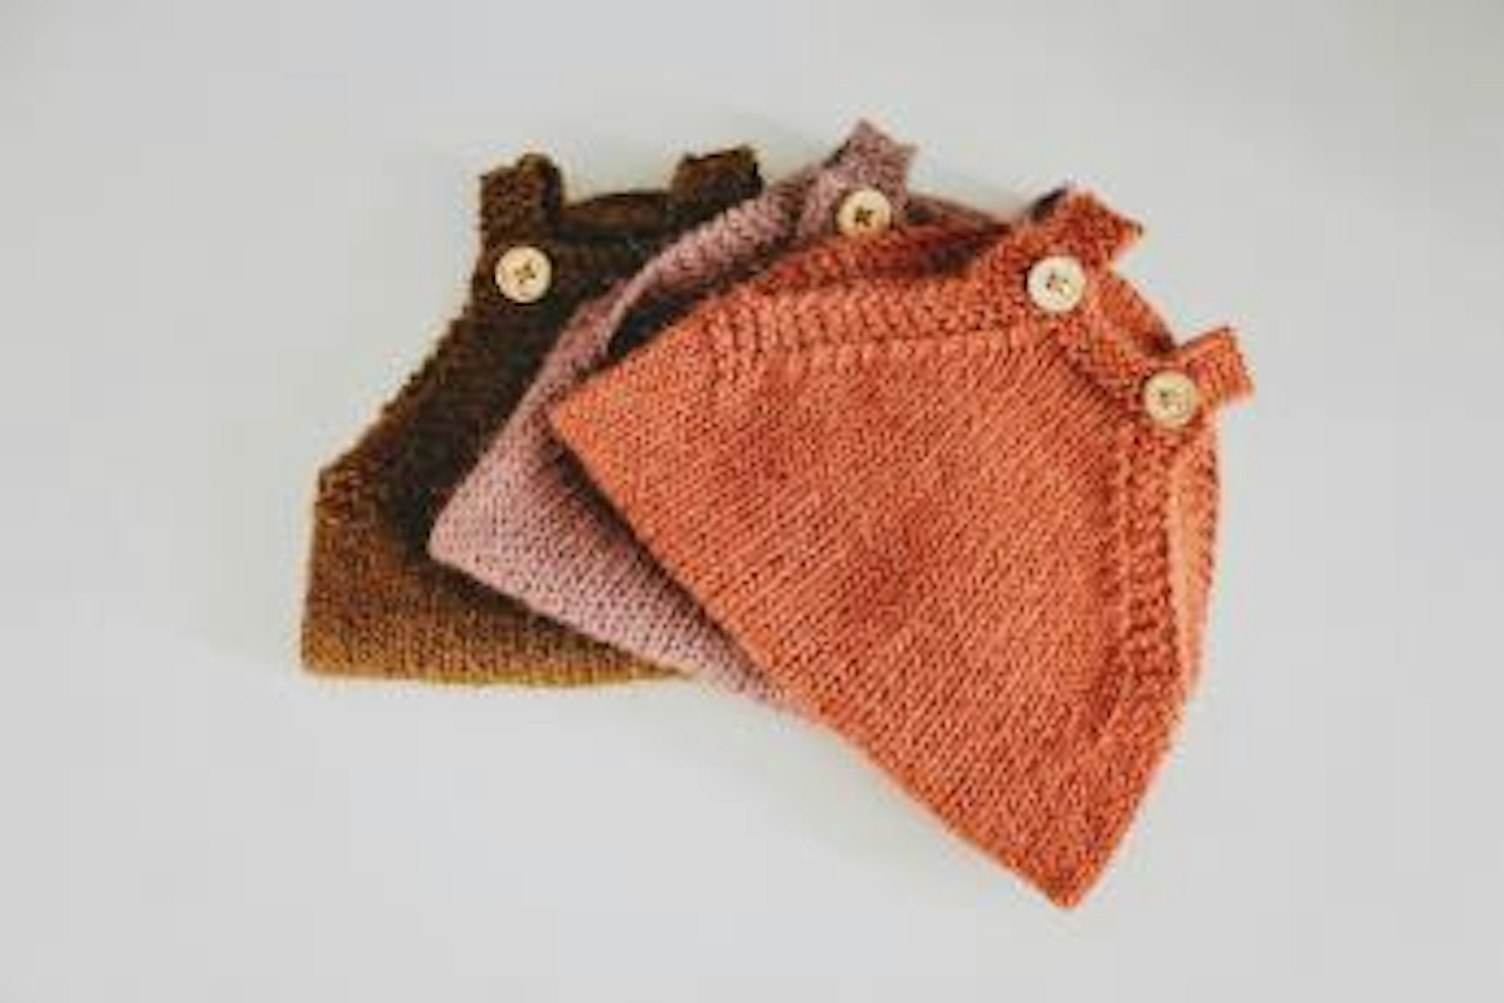 orig knitted baby clothesunsplash